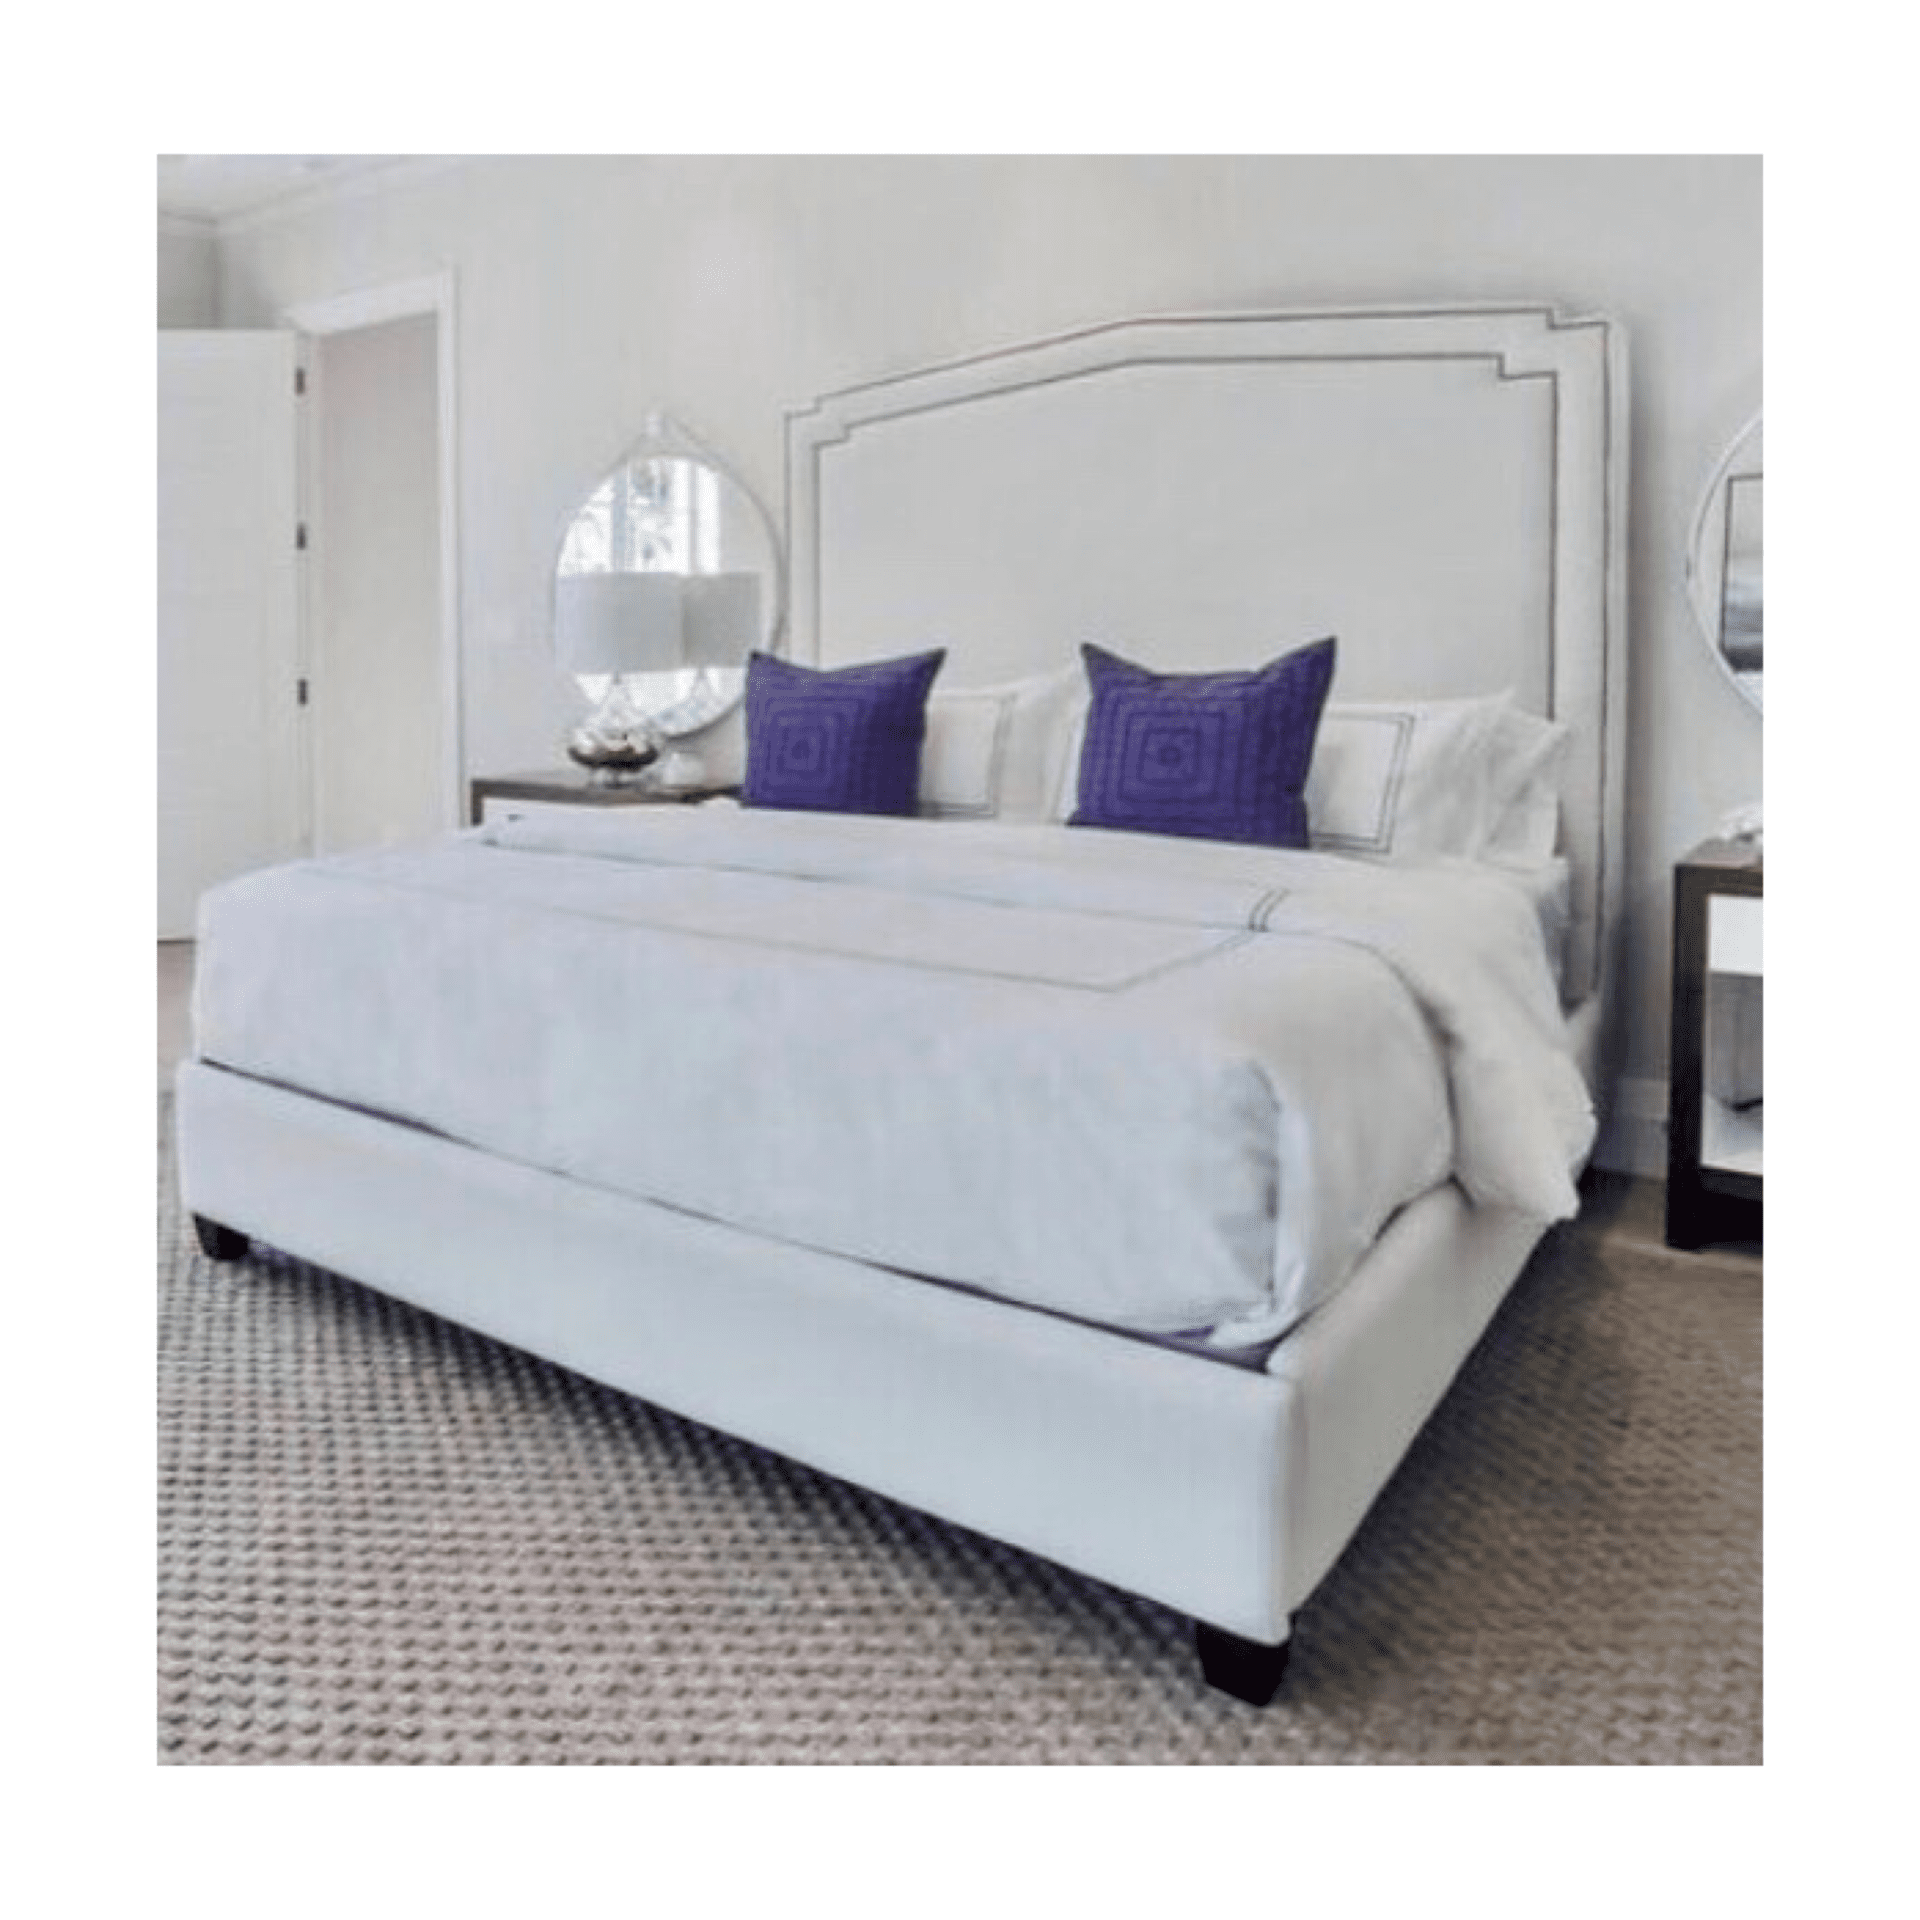 Melody custom bedroom furniture and custom upholstered headboard​